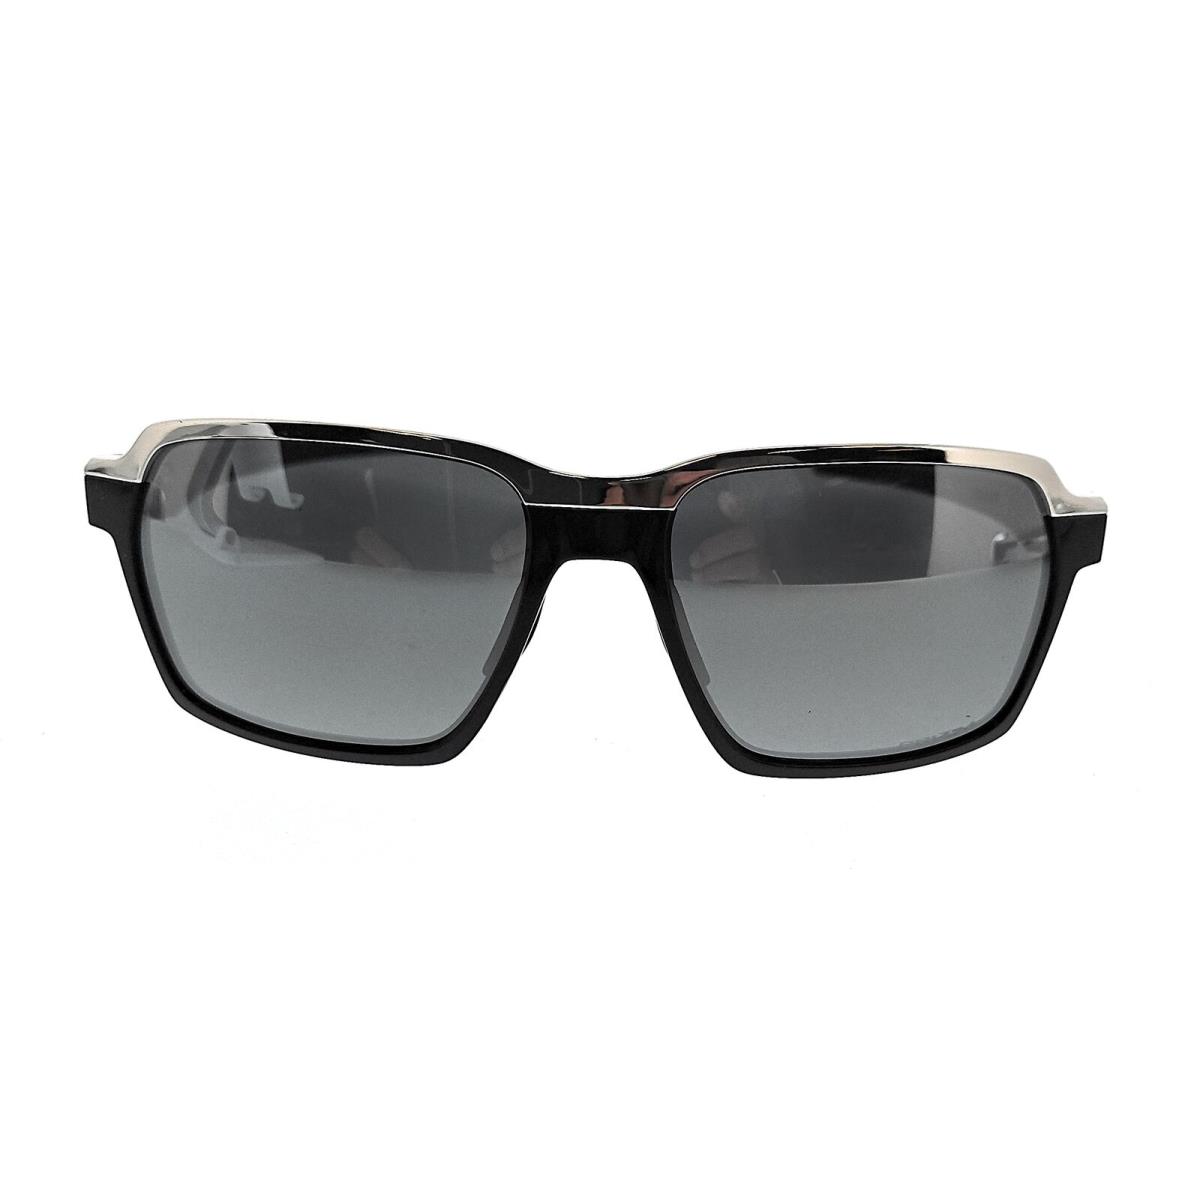 Oakley 0OO4143 414302 Parlay Black Square Sunglasses